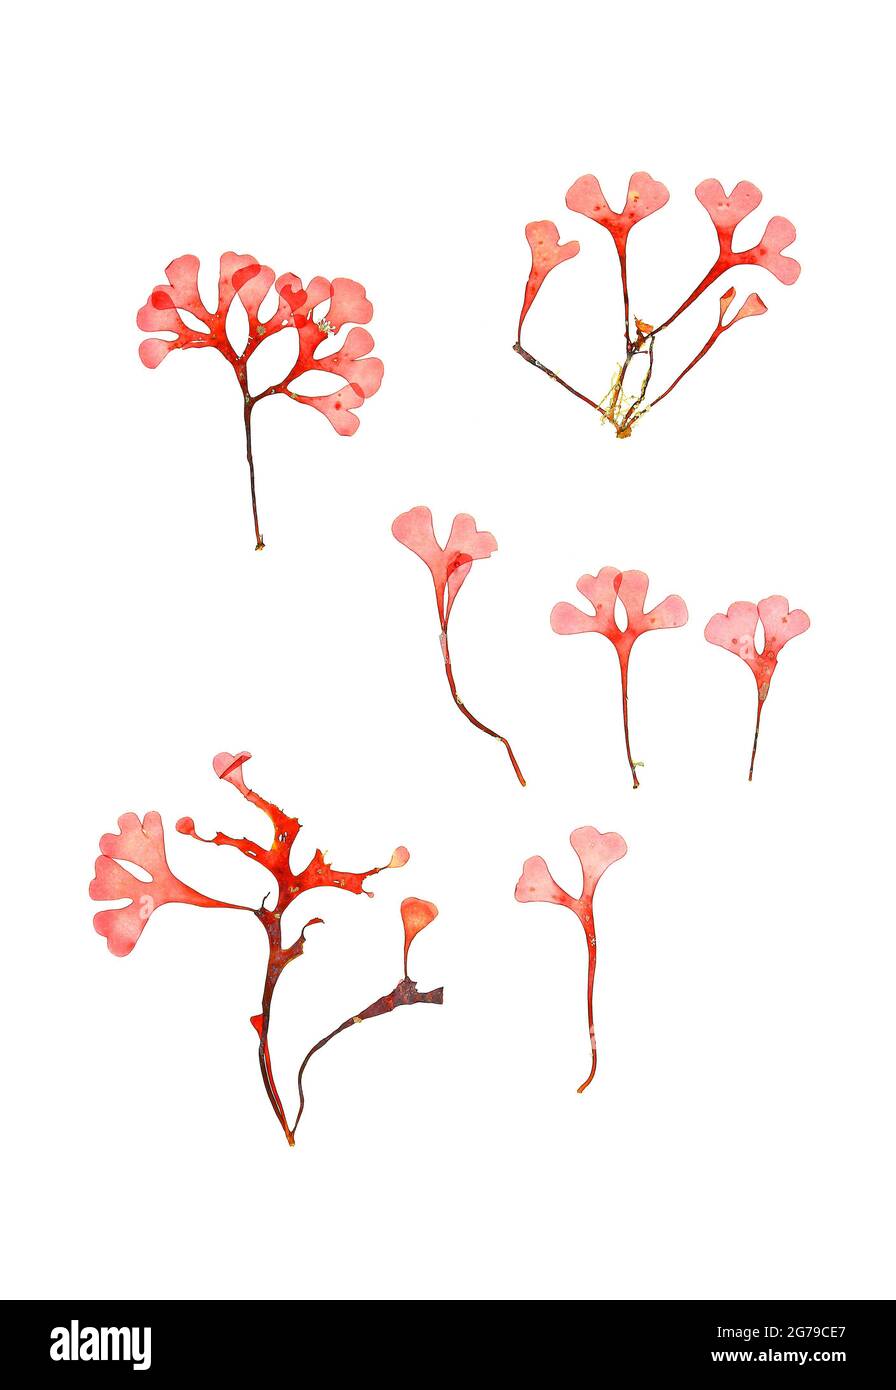 Phyllophora sicula (Kützing) Guiry & LMIrvine, Red Alga (Florideophyceae) Stock Photo